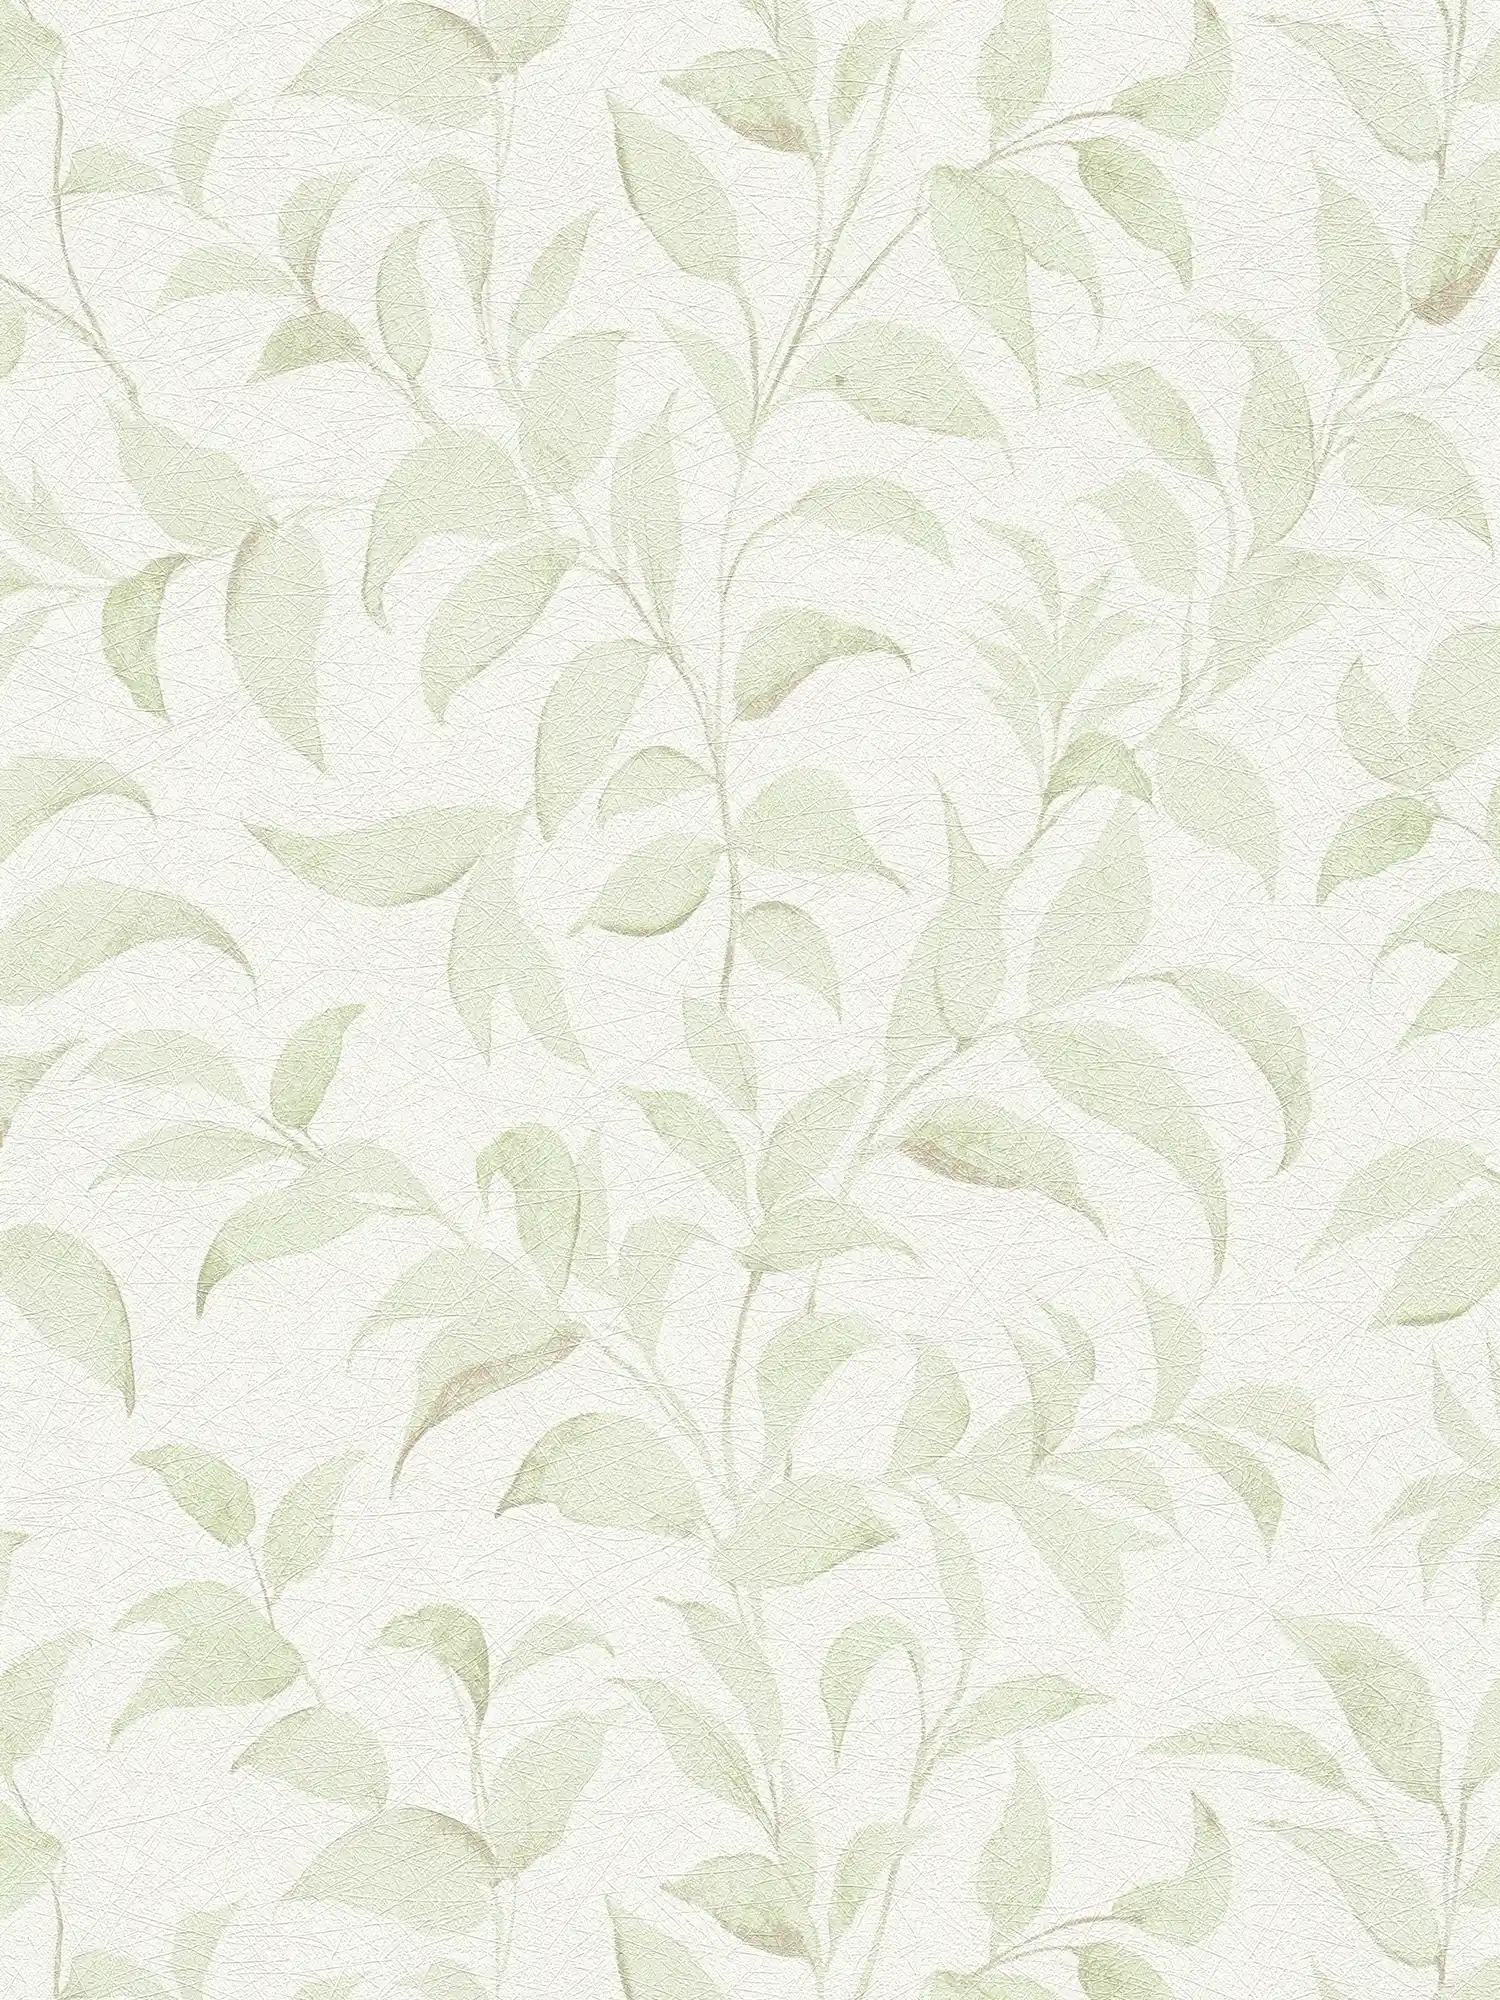 Carta da parati Foglie con texture floreale - bianco, verde
